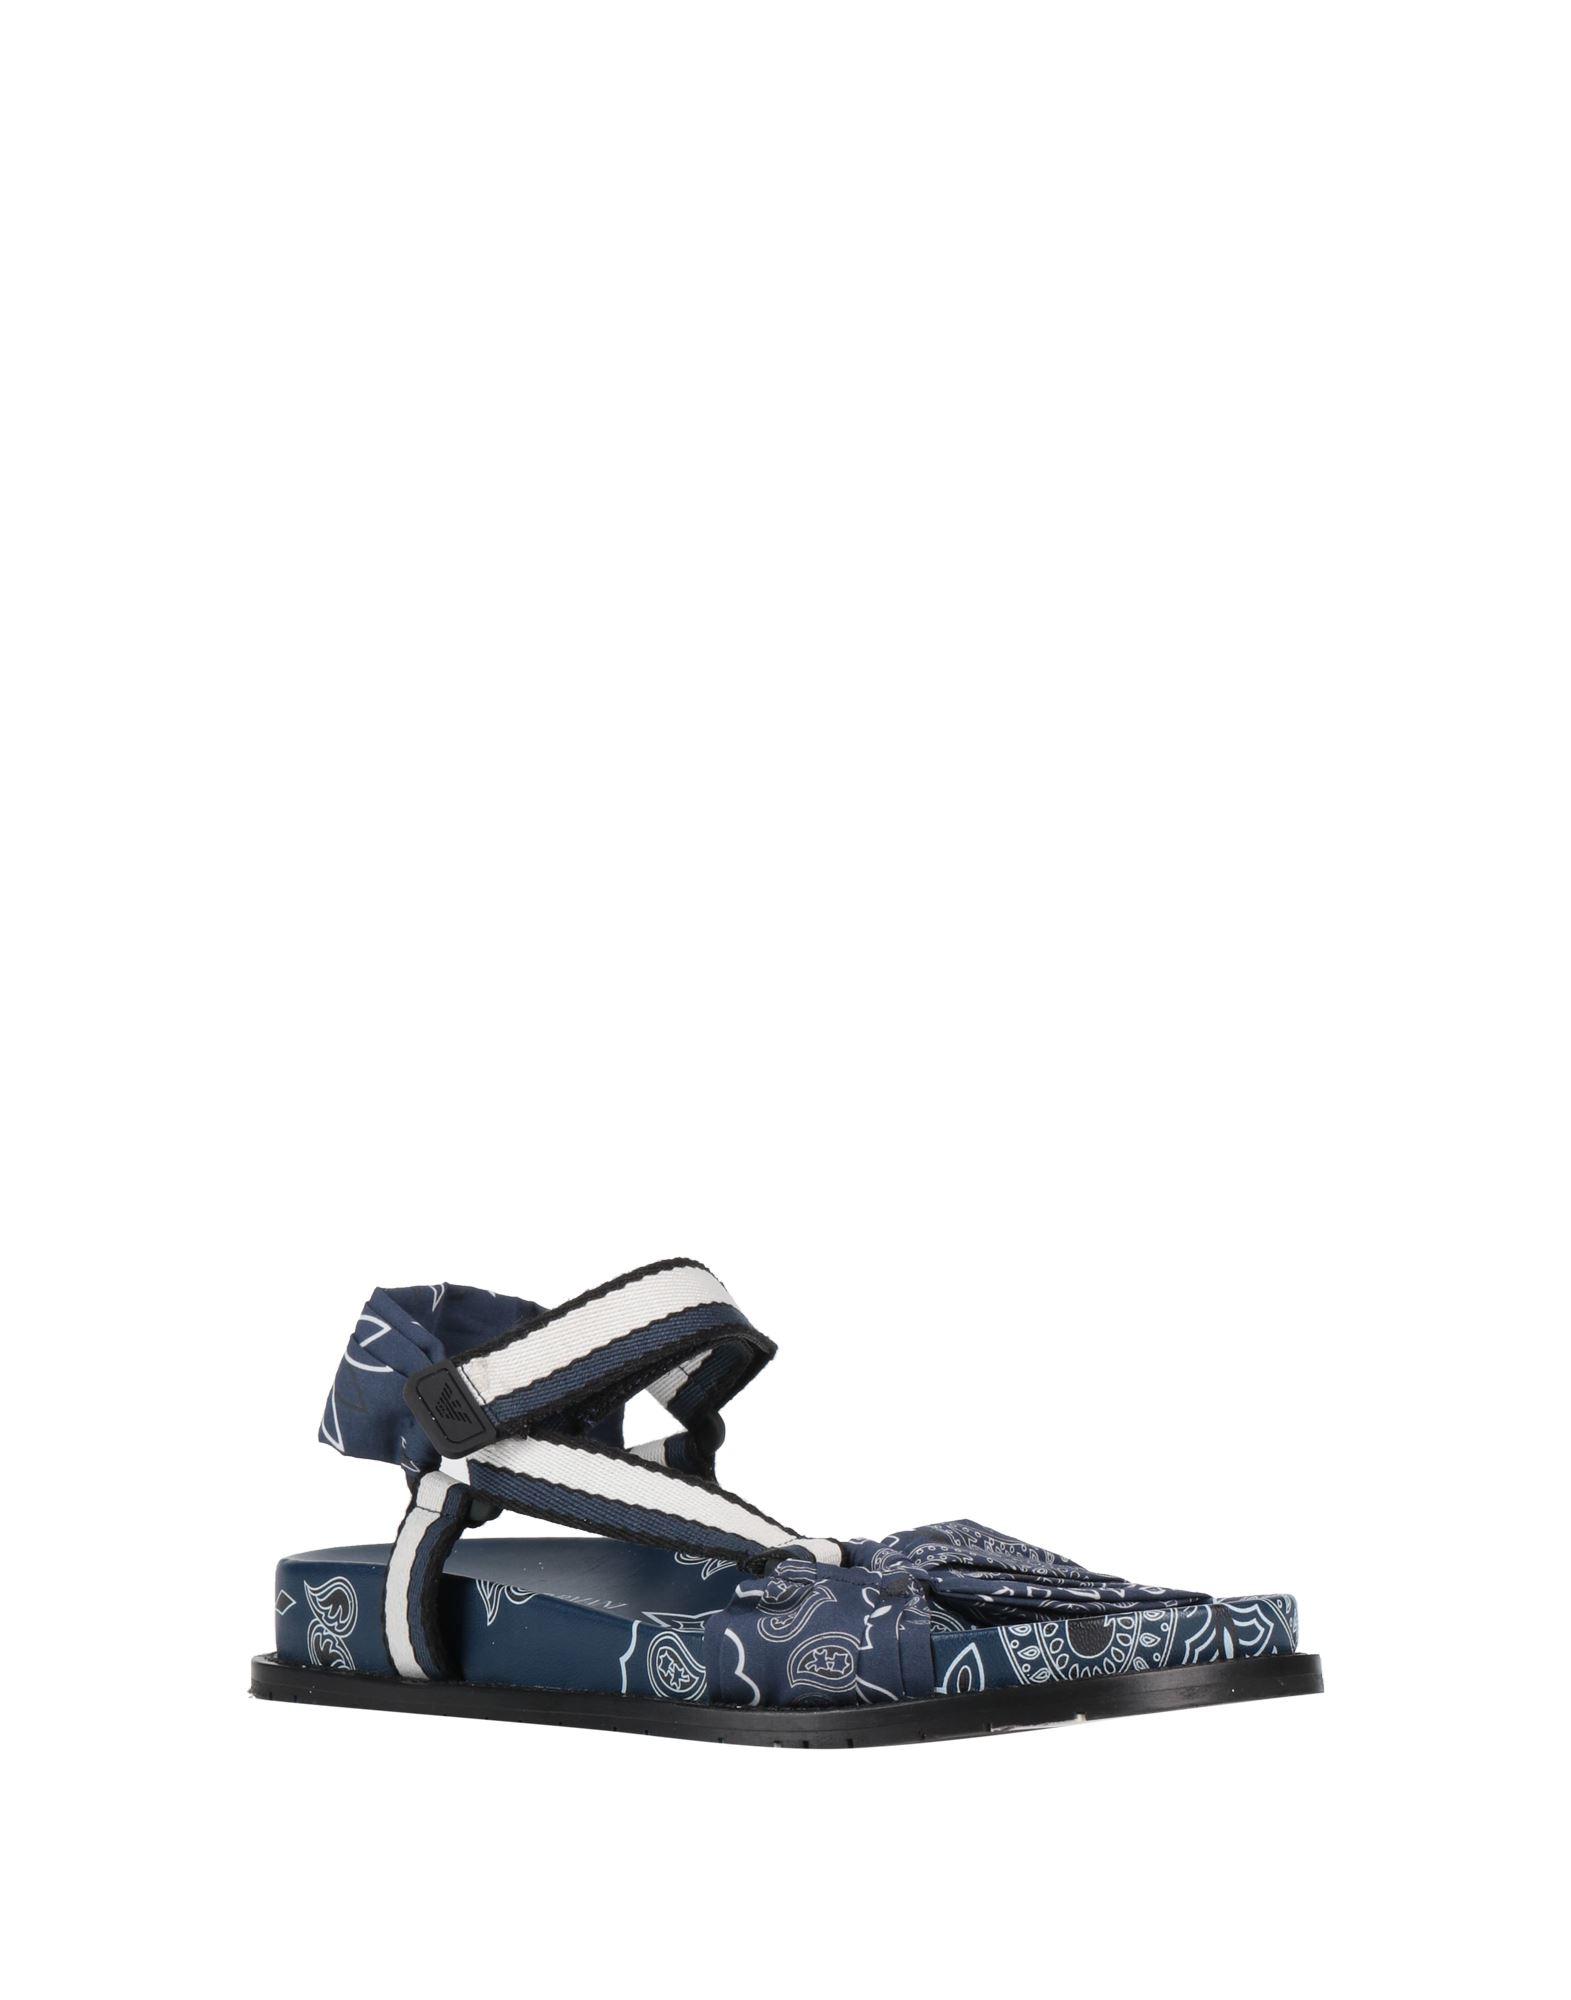 Emporio Armani Sandals in Blue | Lyst